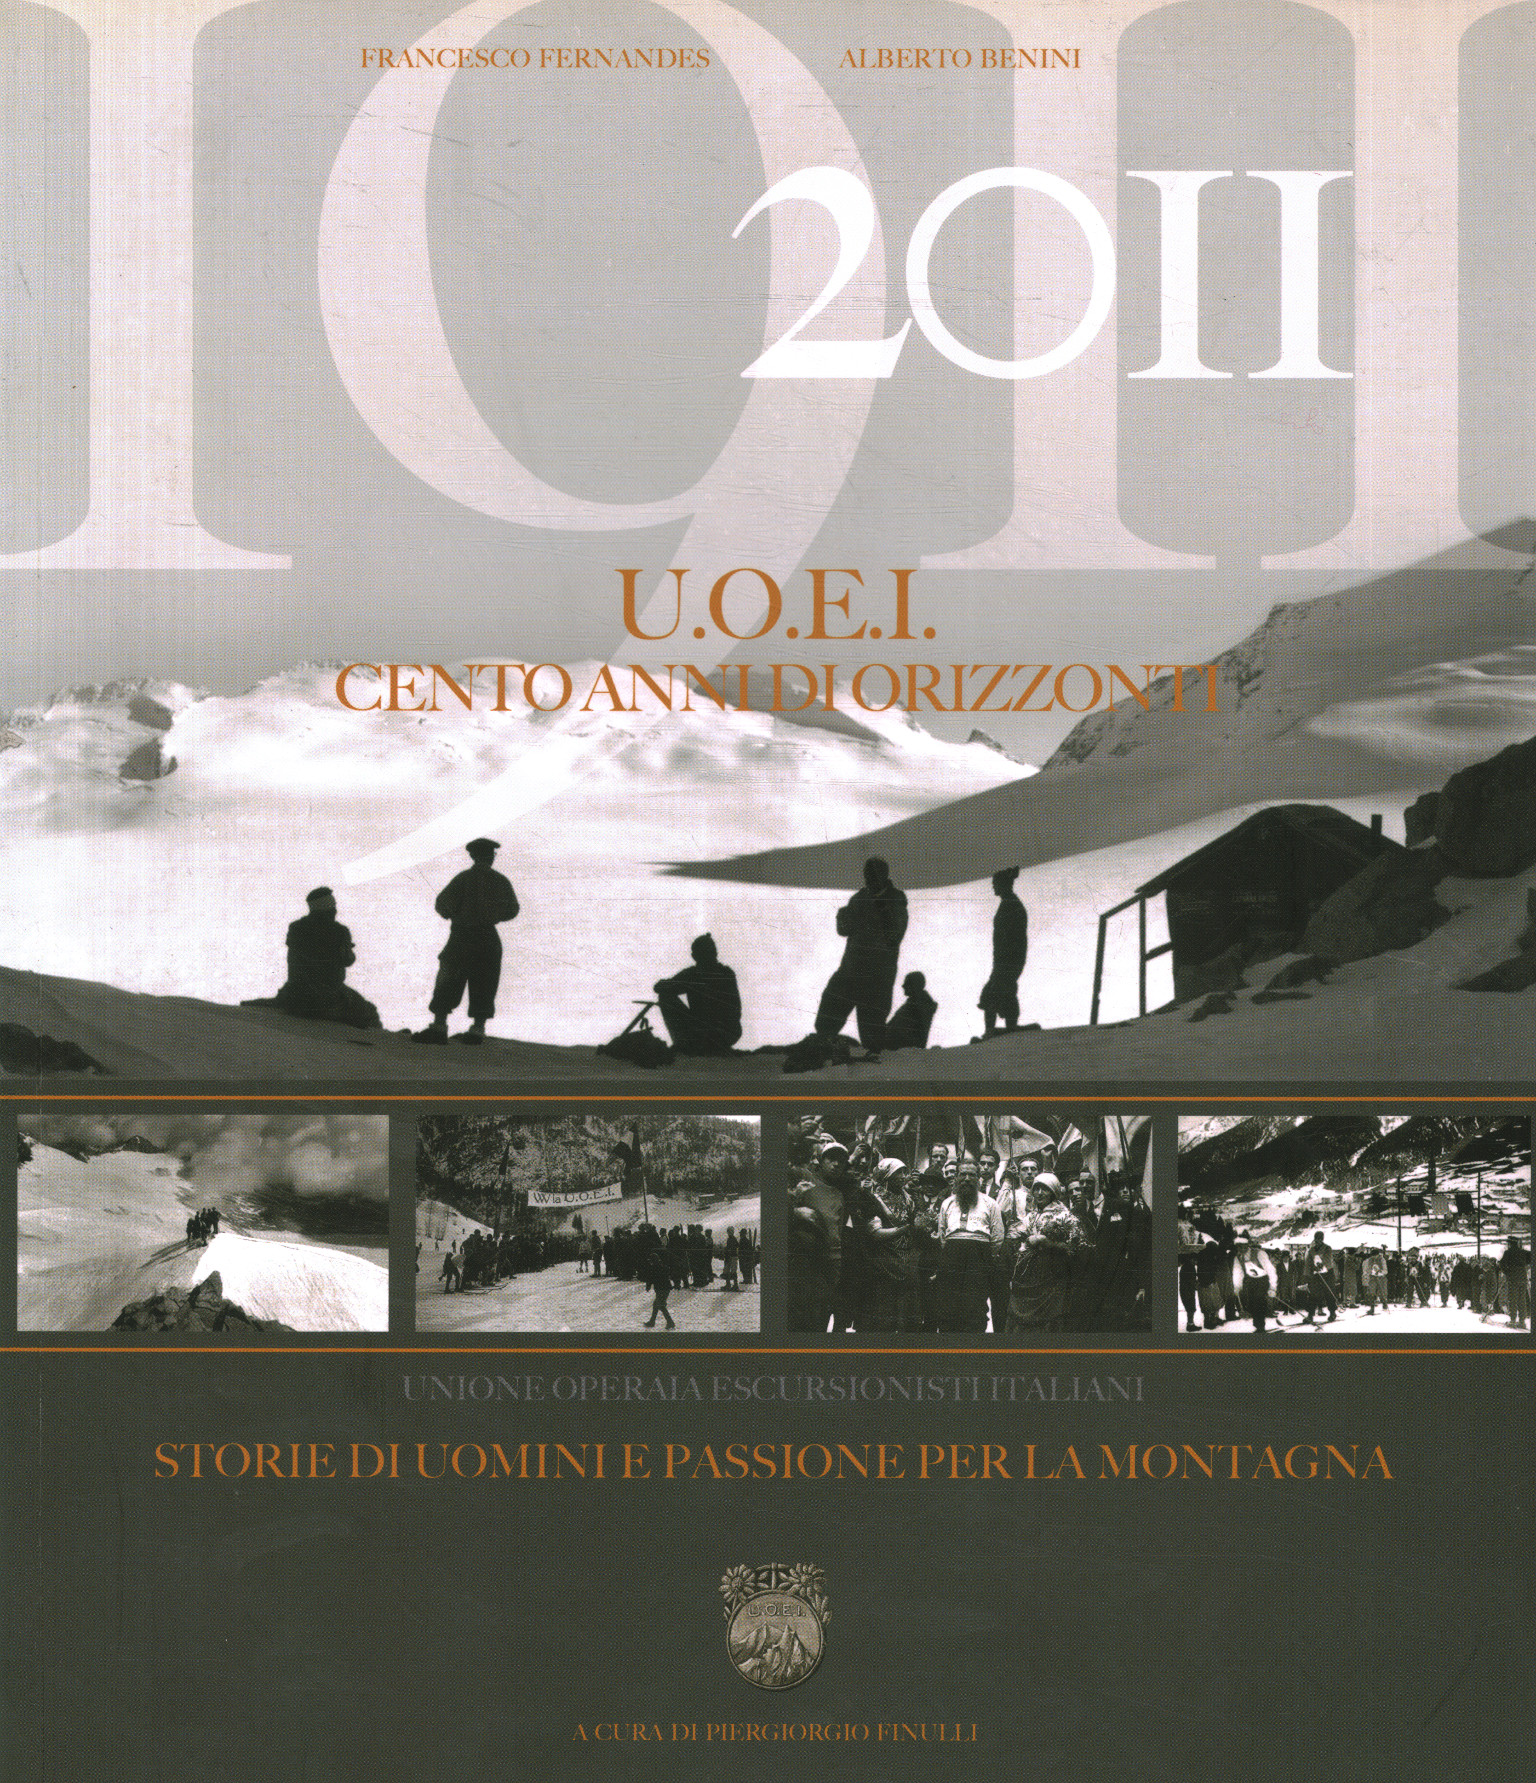 1911-2011 U.O.E.I. Hundert Jahre Horizont